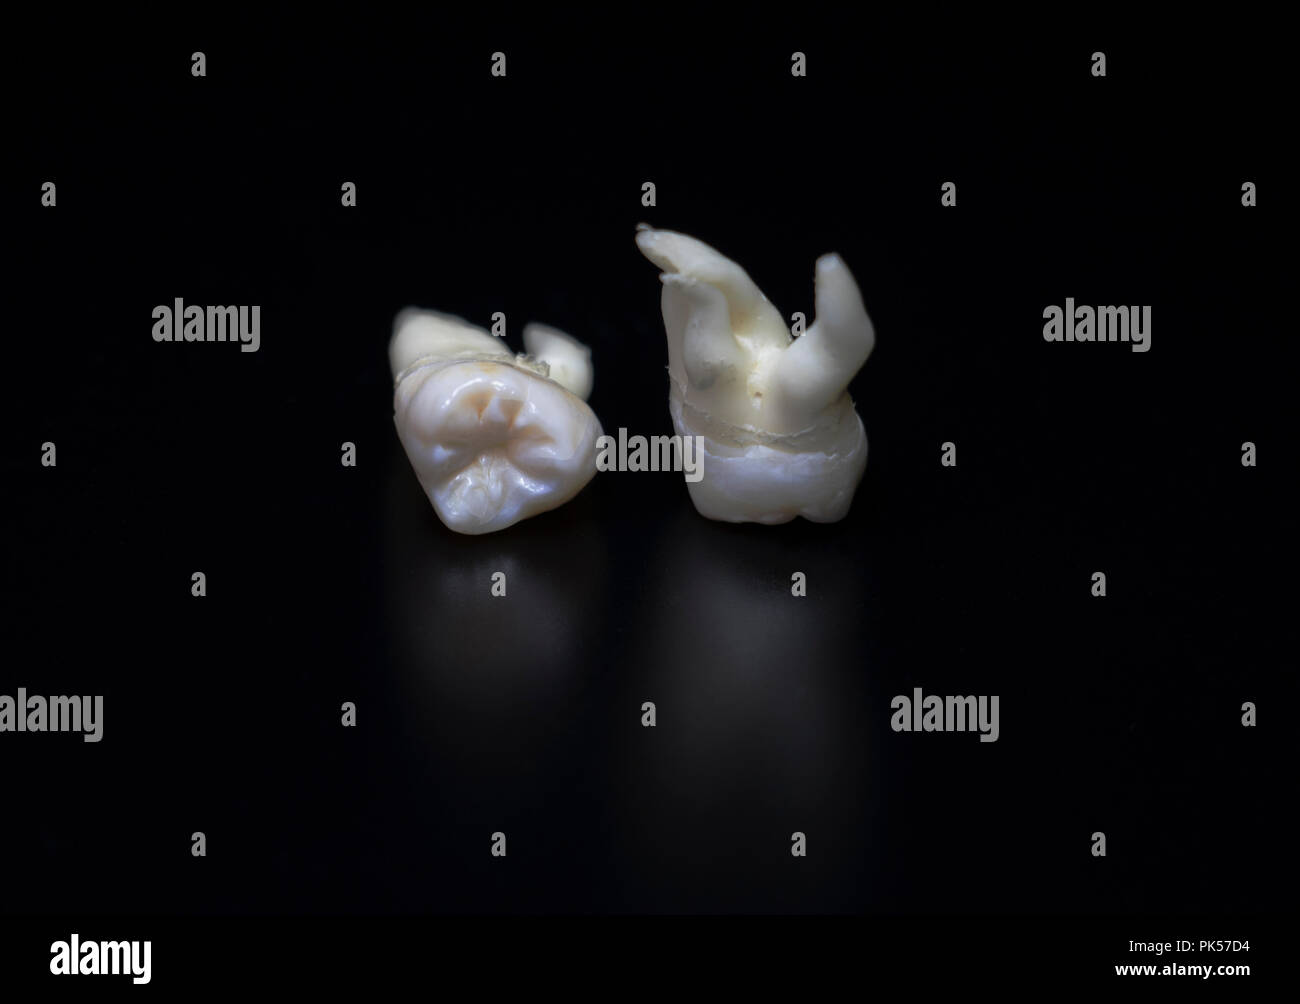 Human teeth. Extracted wisdom teeth isolated on black background. Set of white teeth. Stock Photo